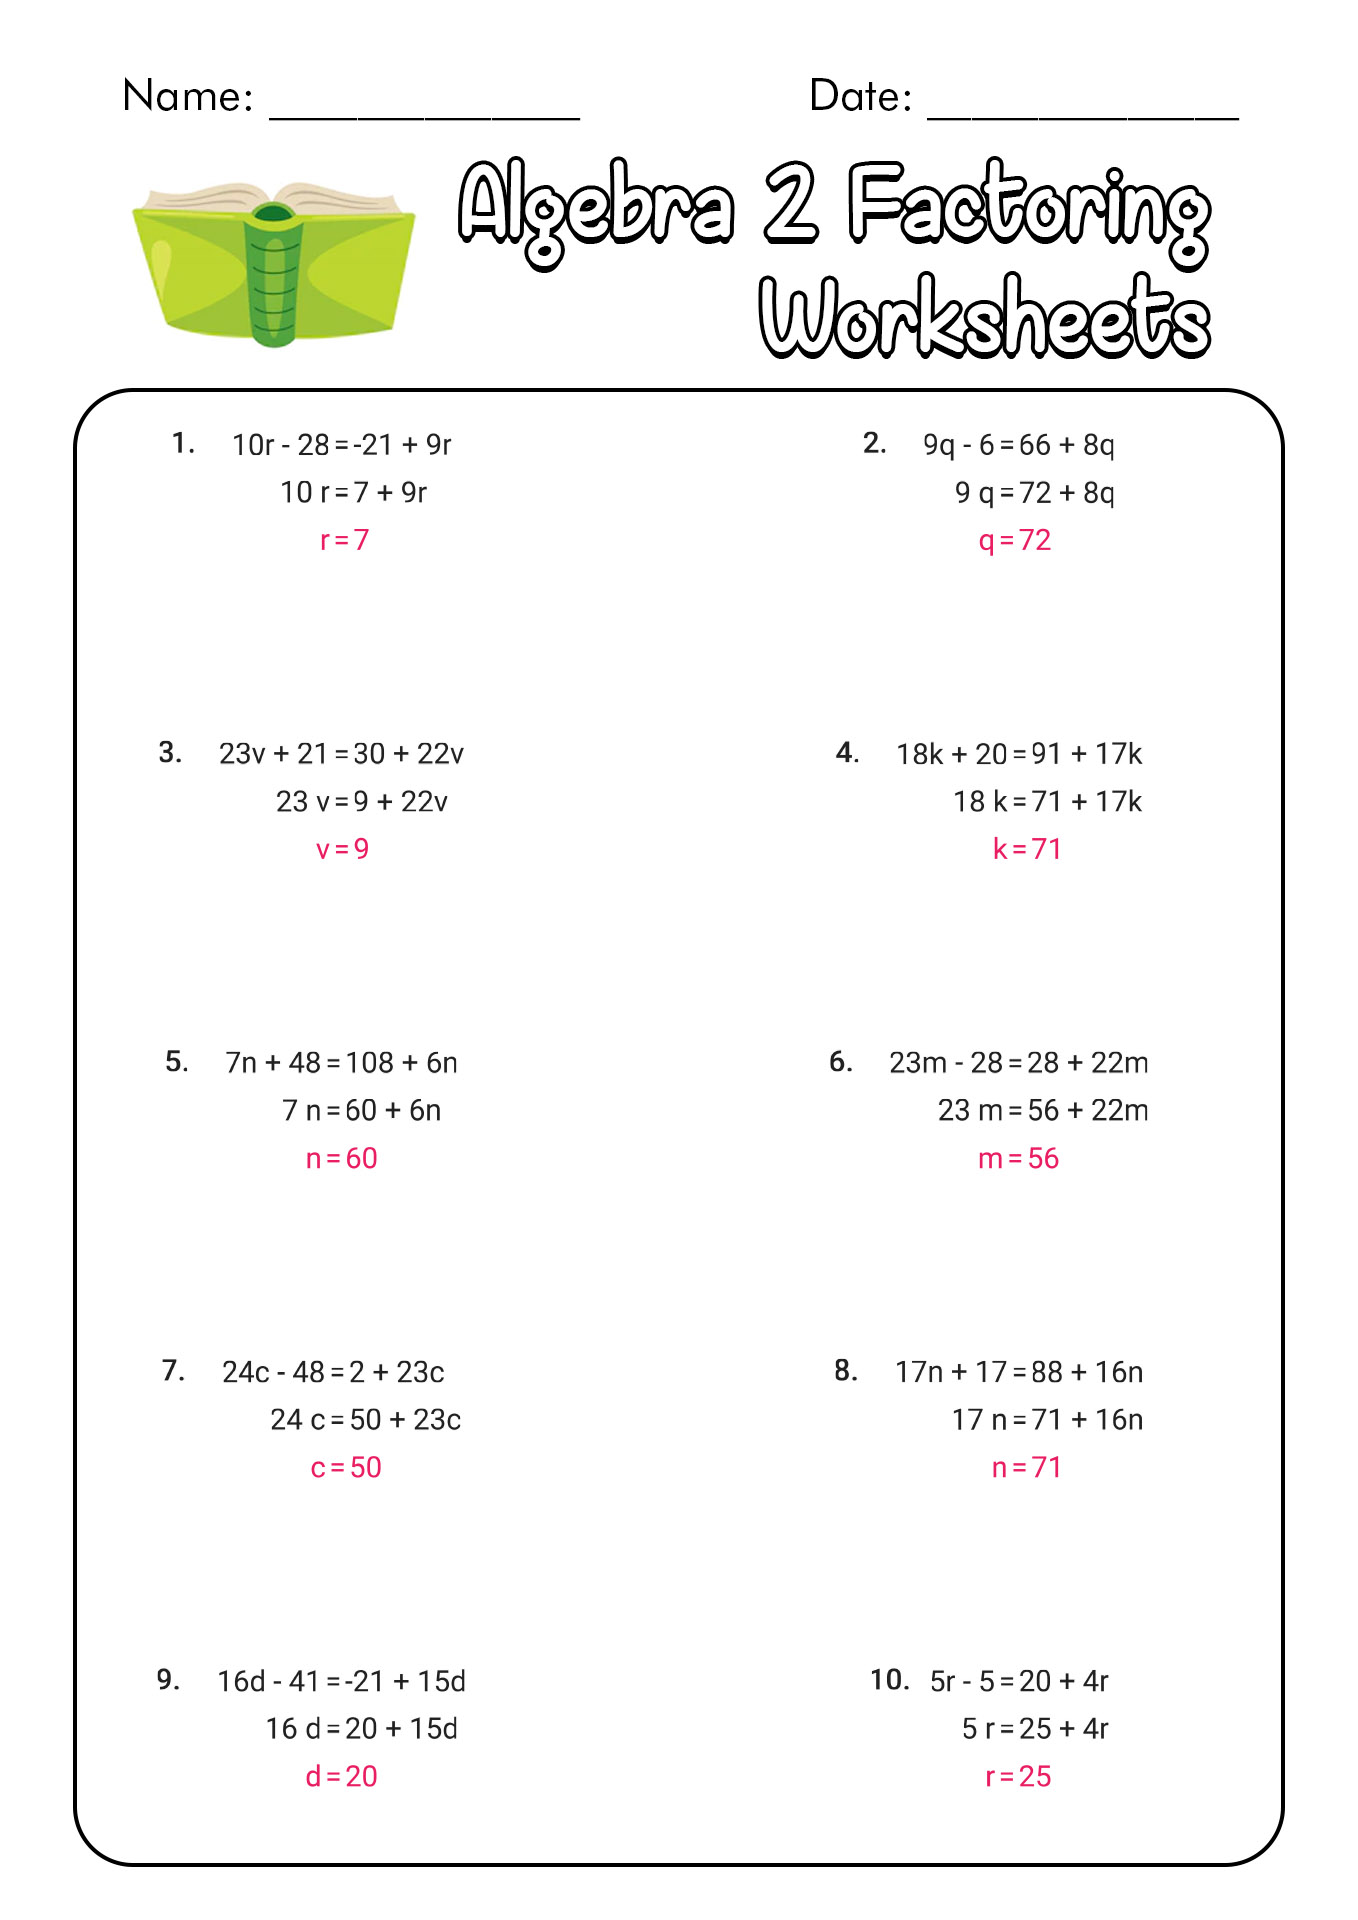 Algebra 2 Factoring Review Worksheet Answers